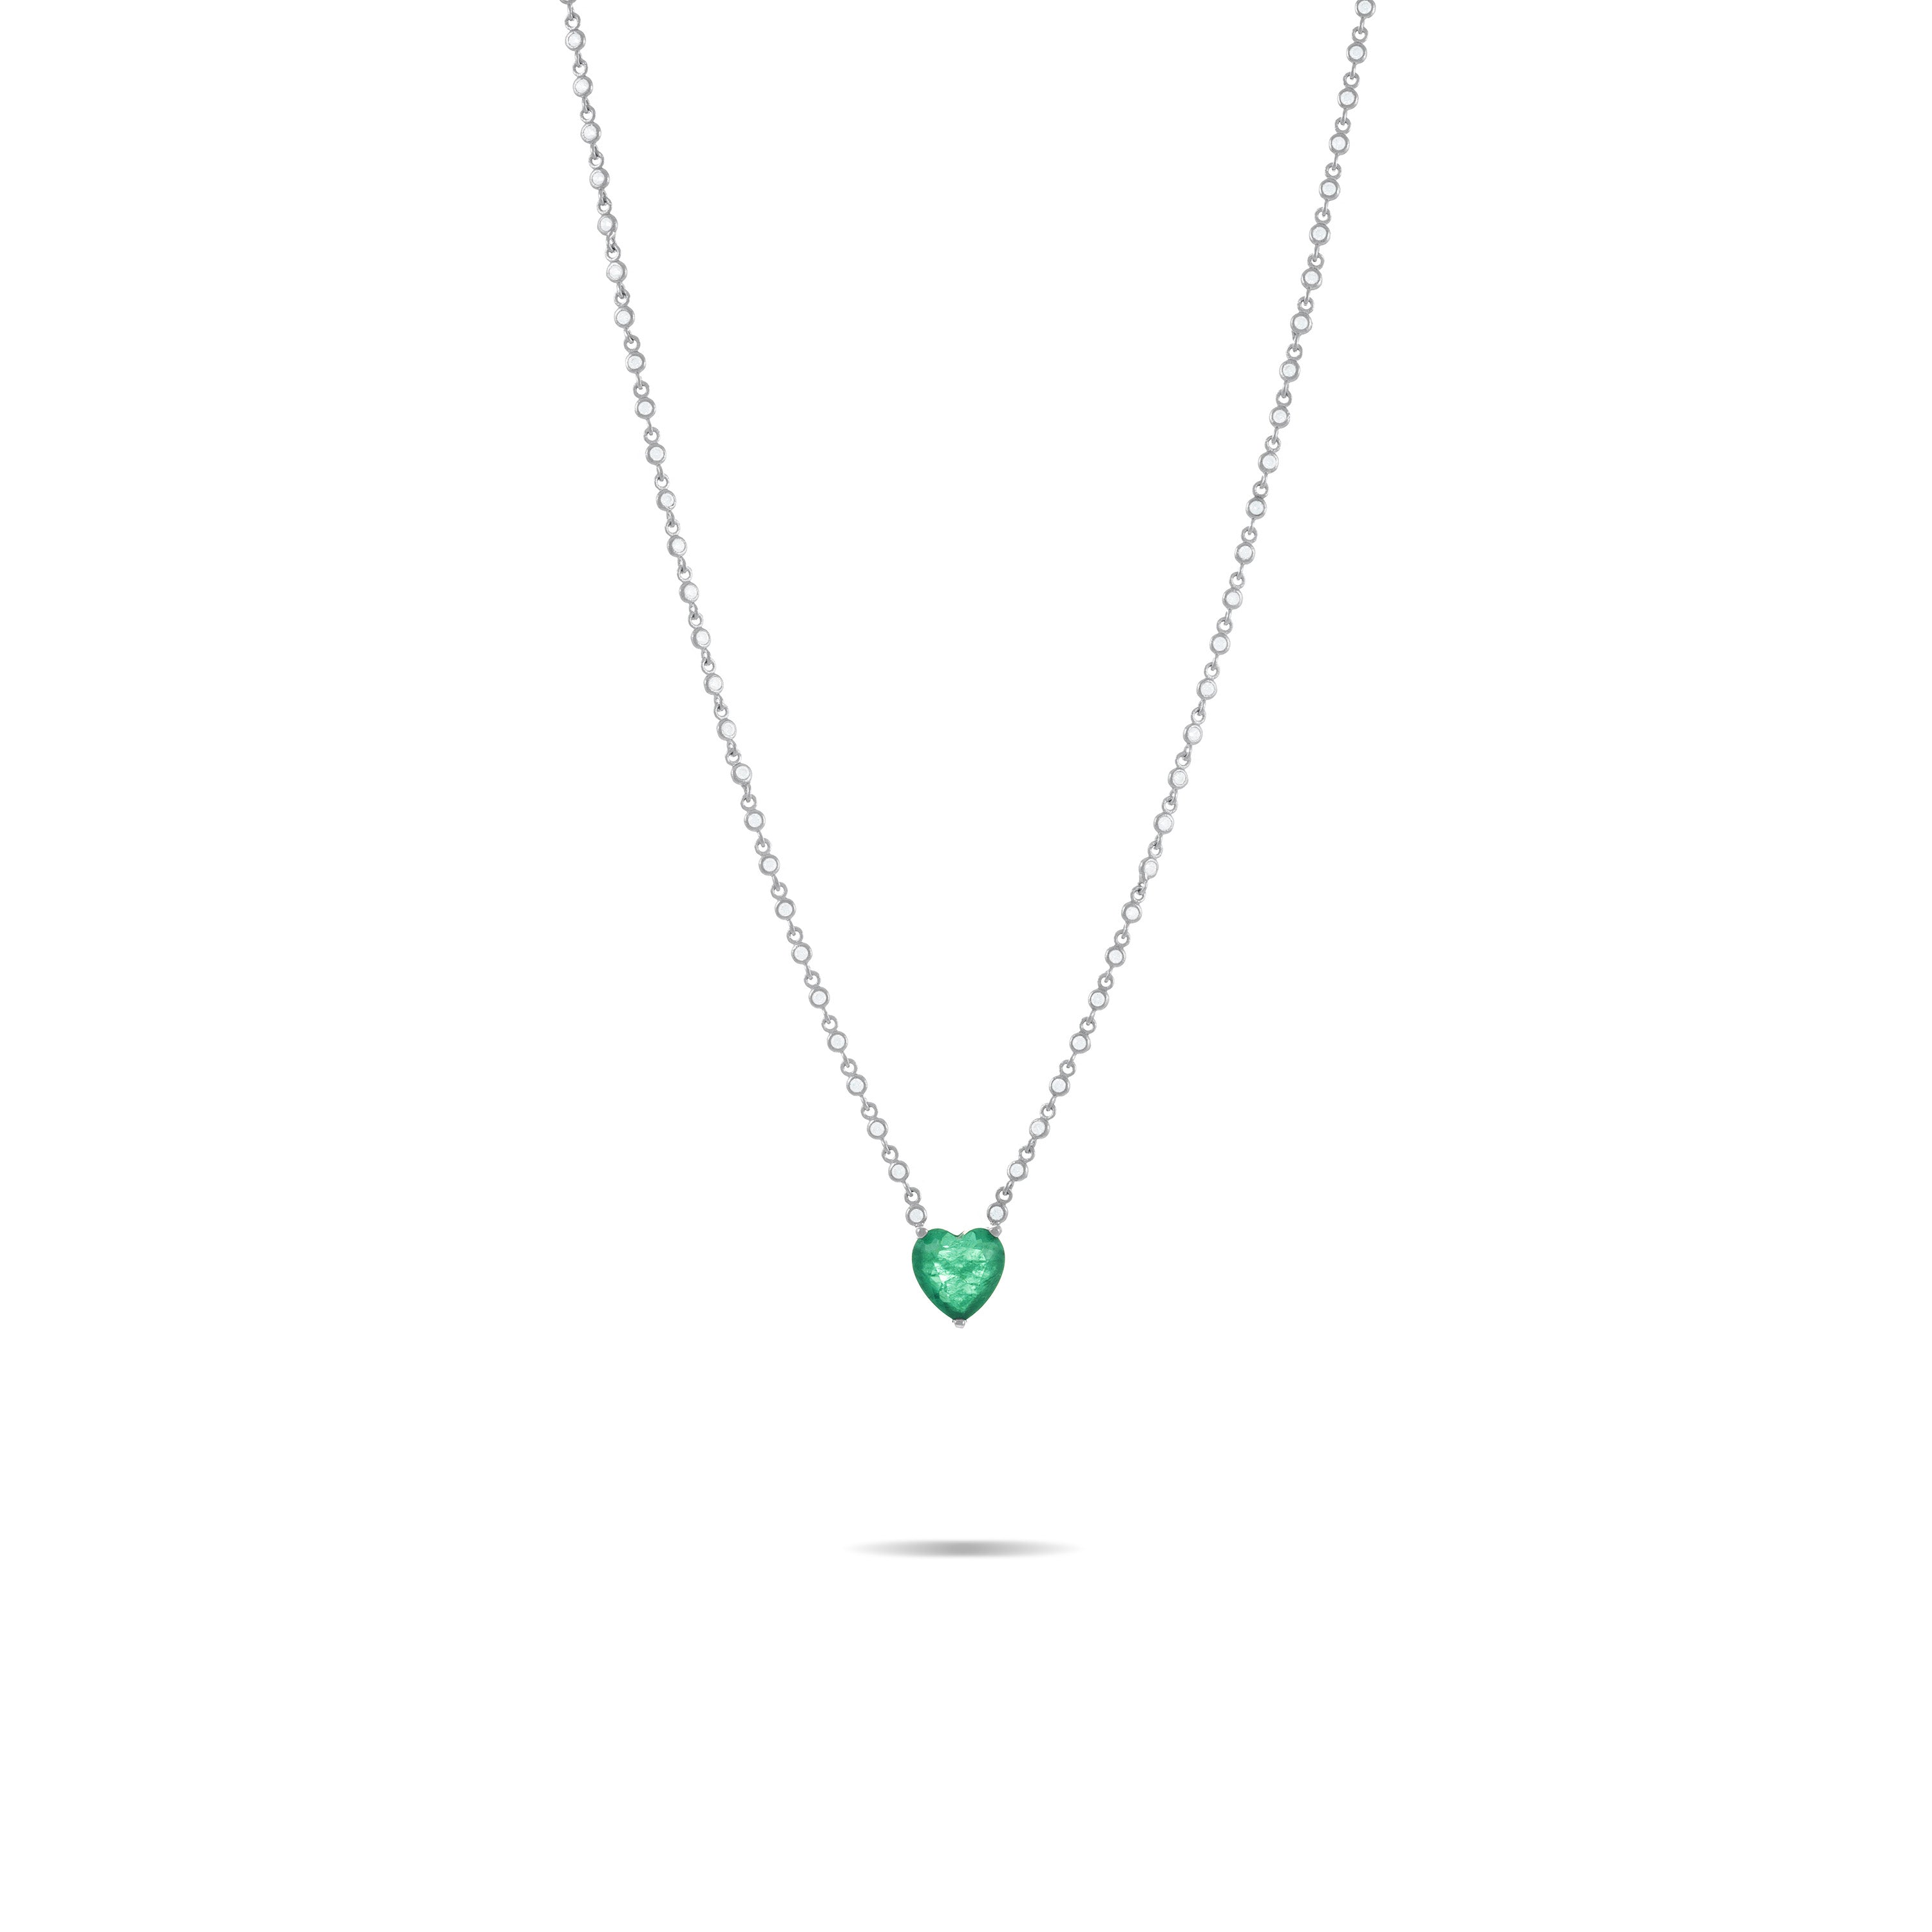 Heart Whit Mini Bezel Chain Necklace